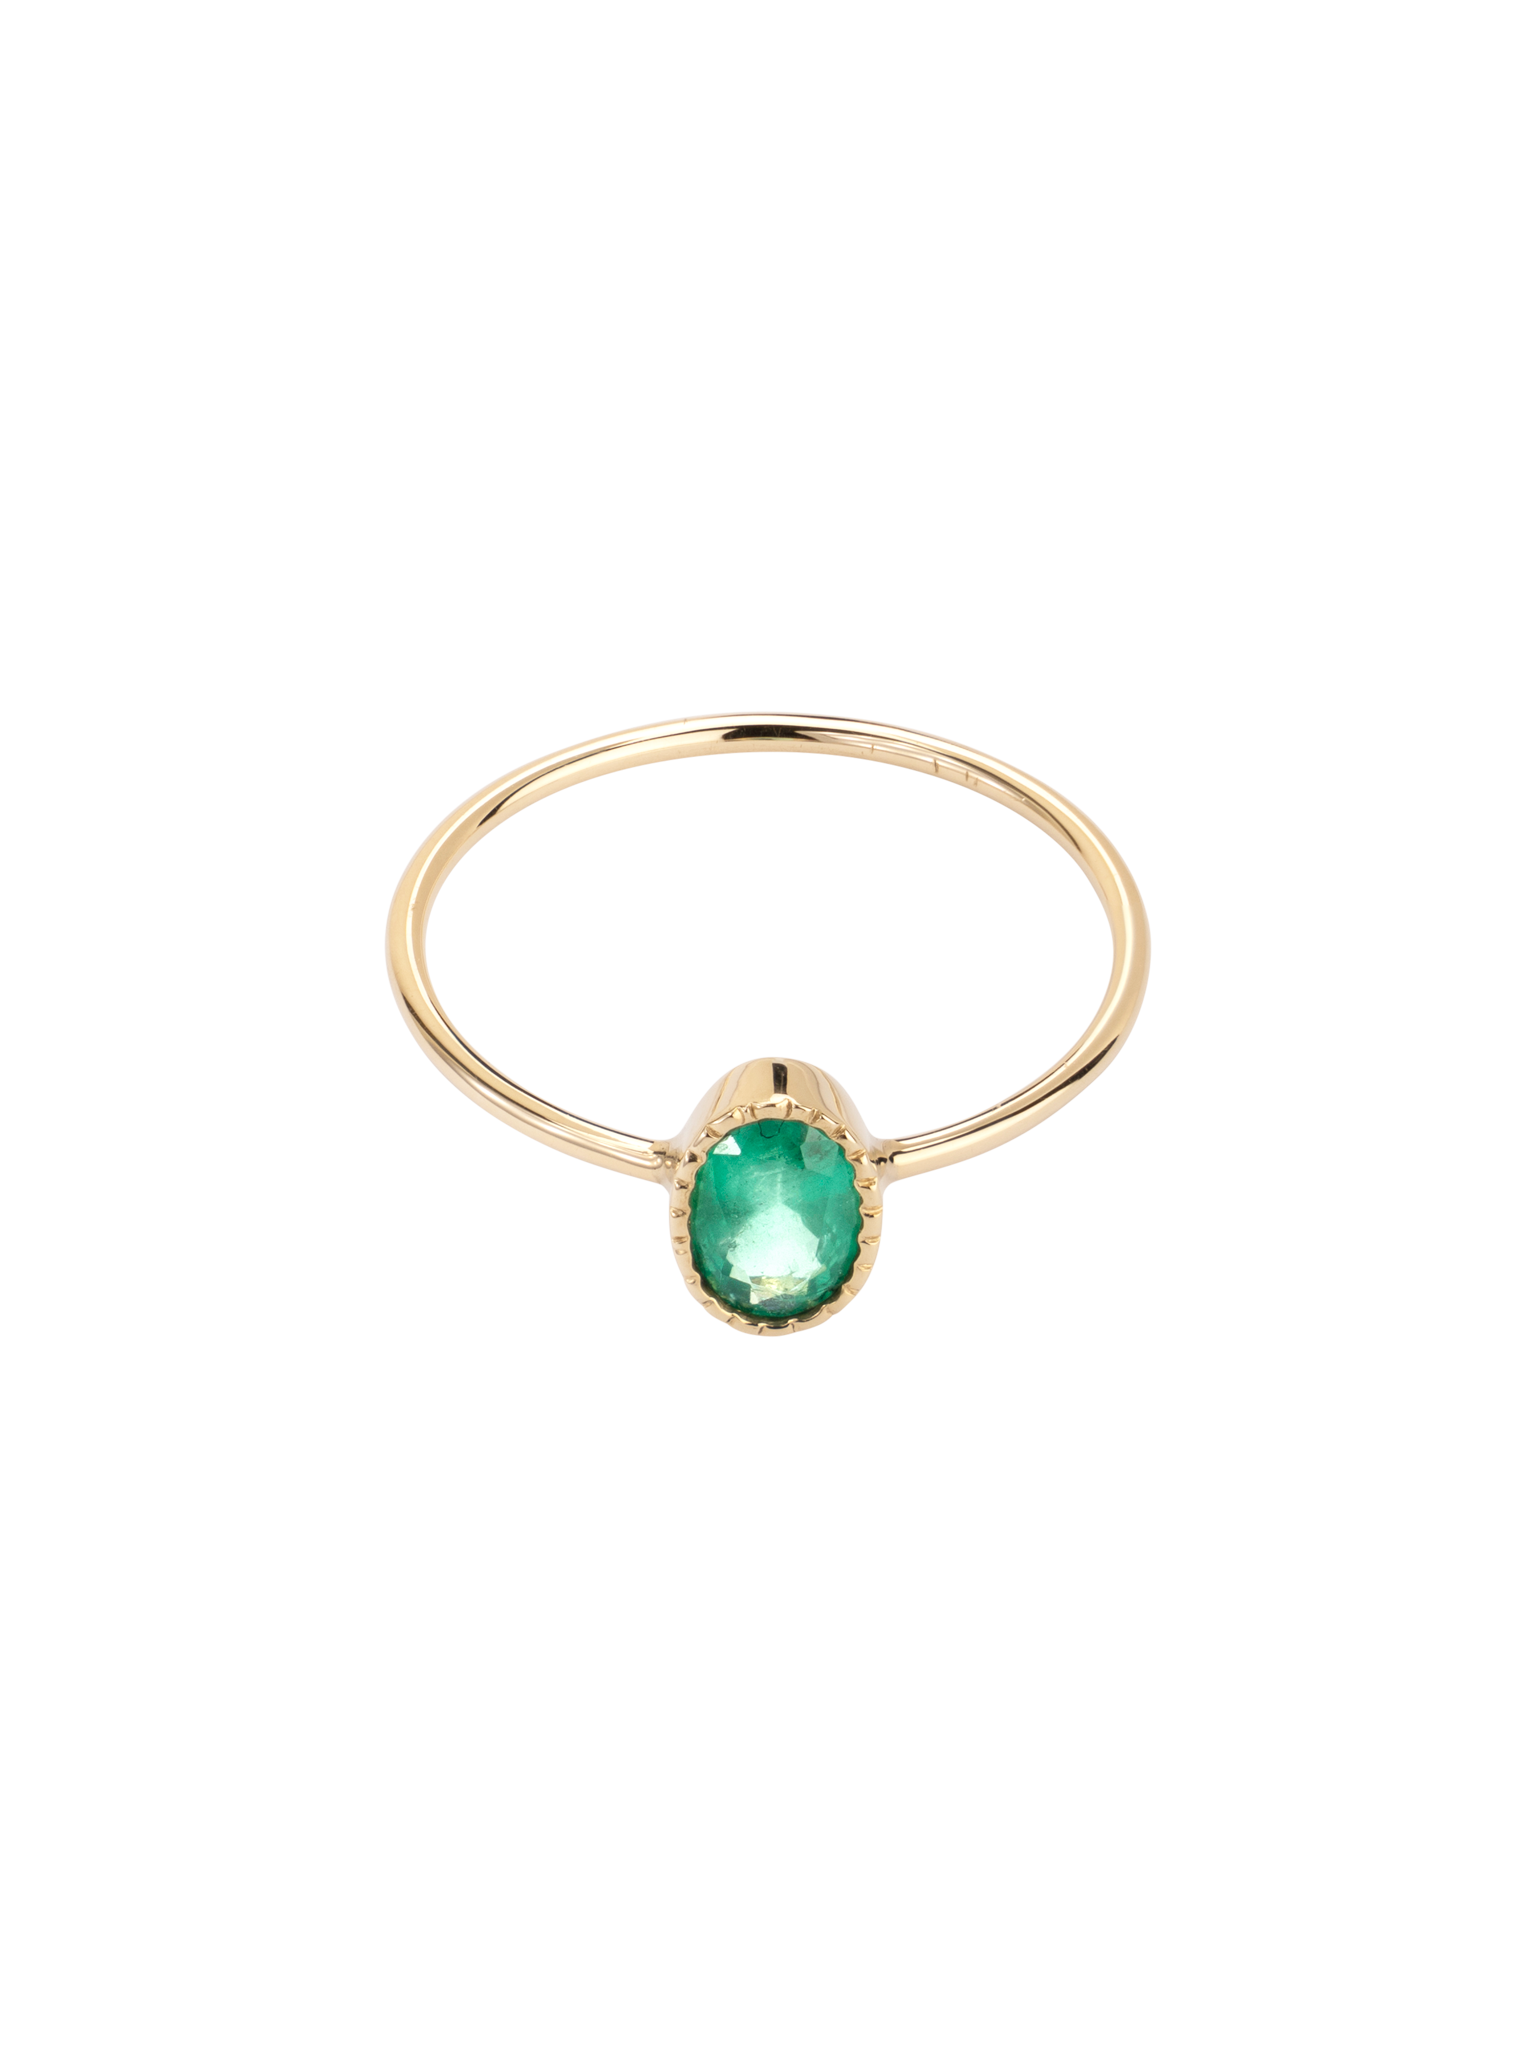 Oval emerald wisp ring